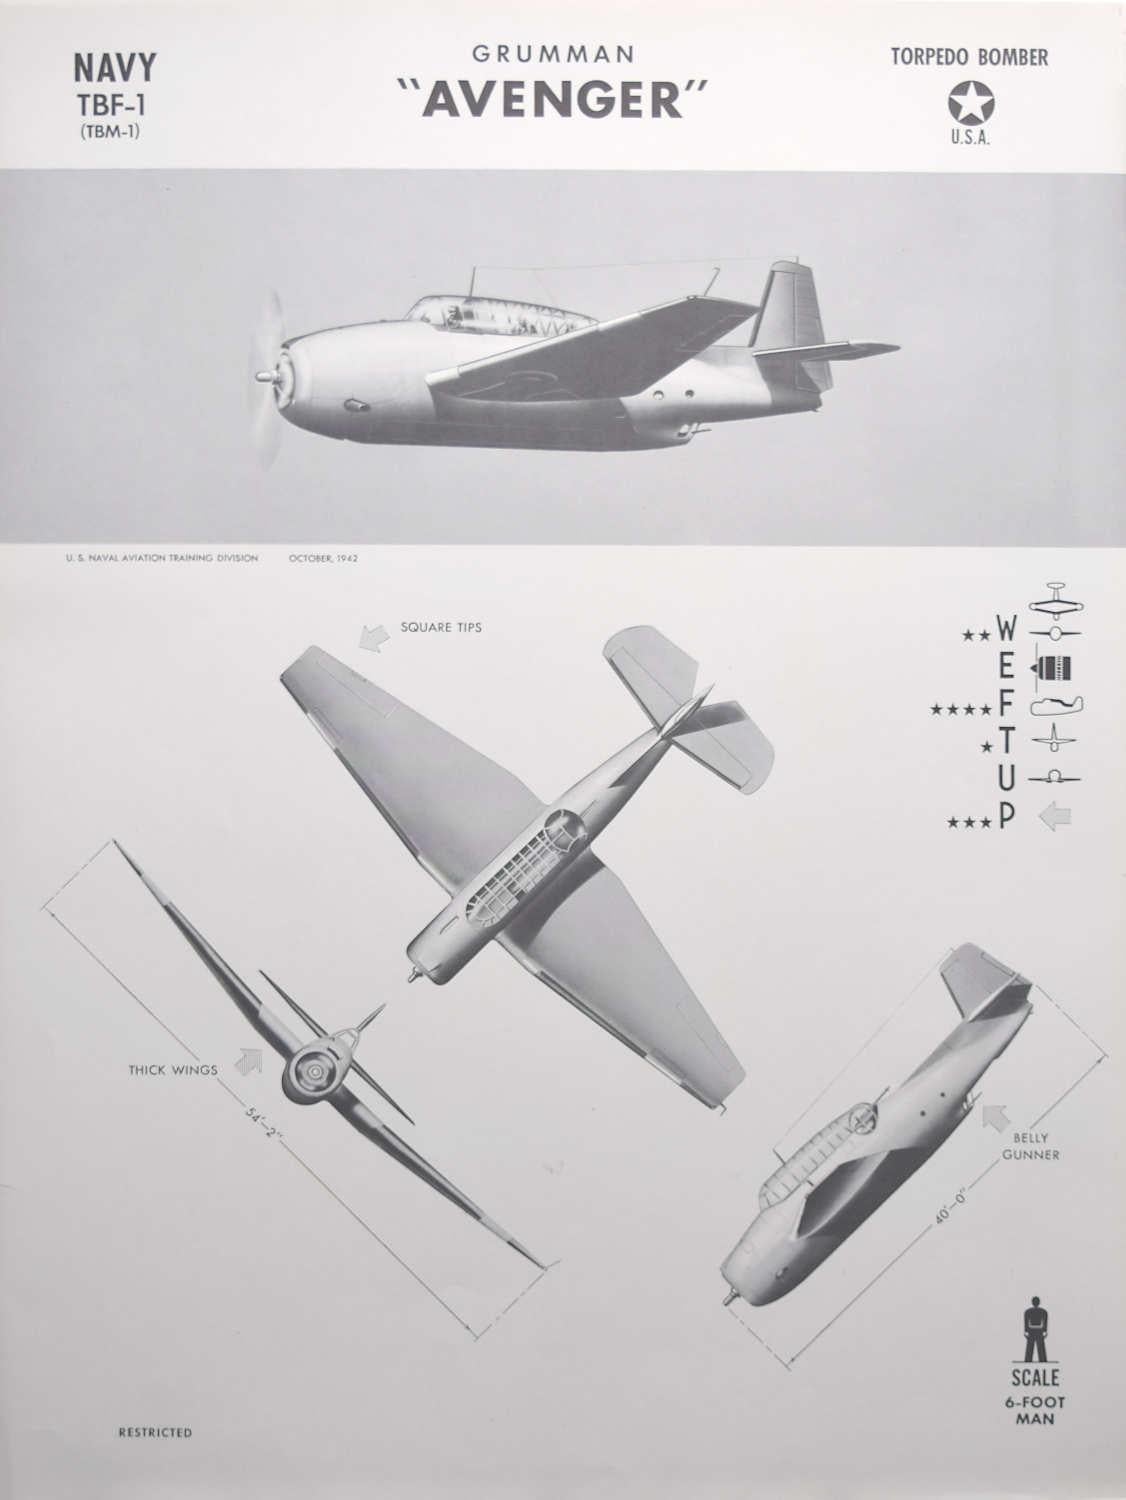 1942 Grumman "Avenger" US torpedo bomber plane identification poster WW2 - Print by Unknown